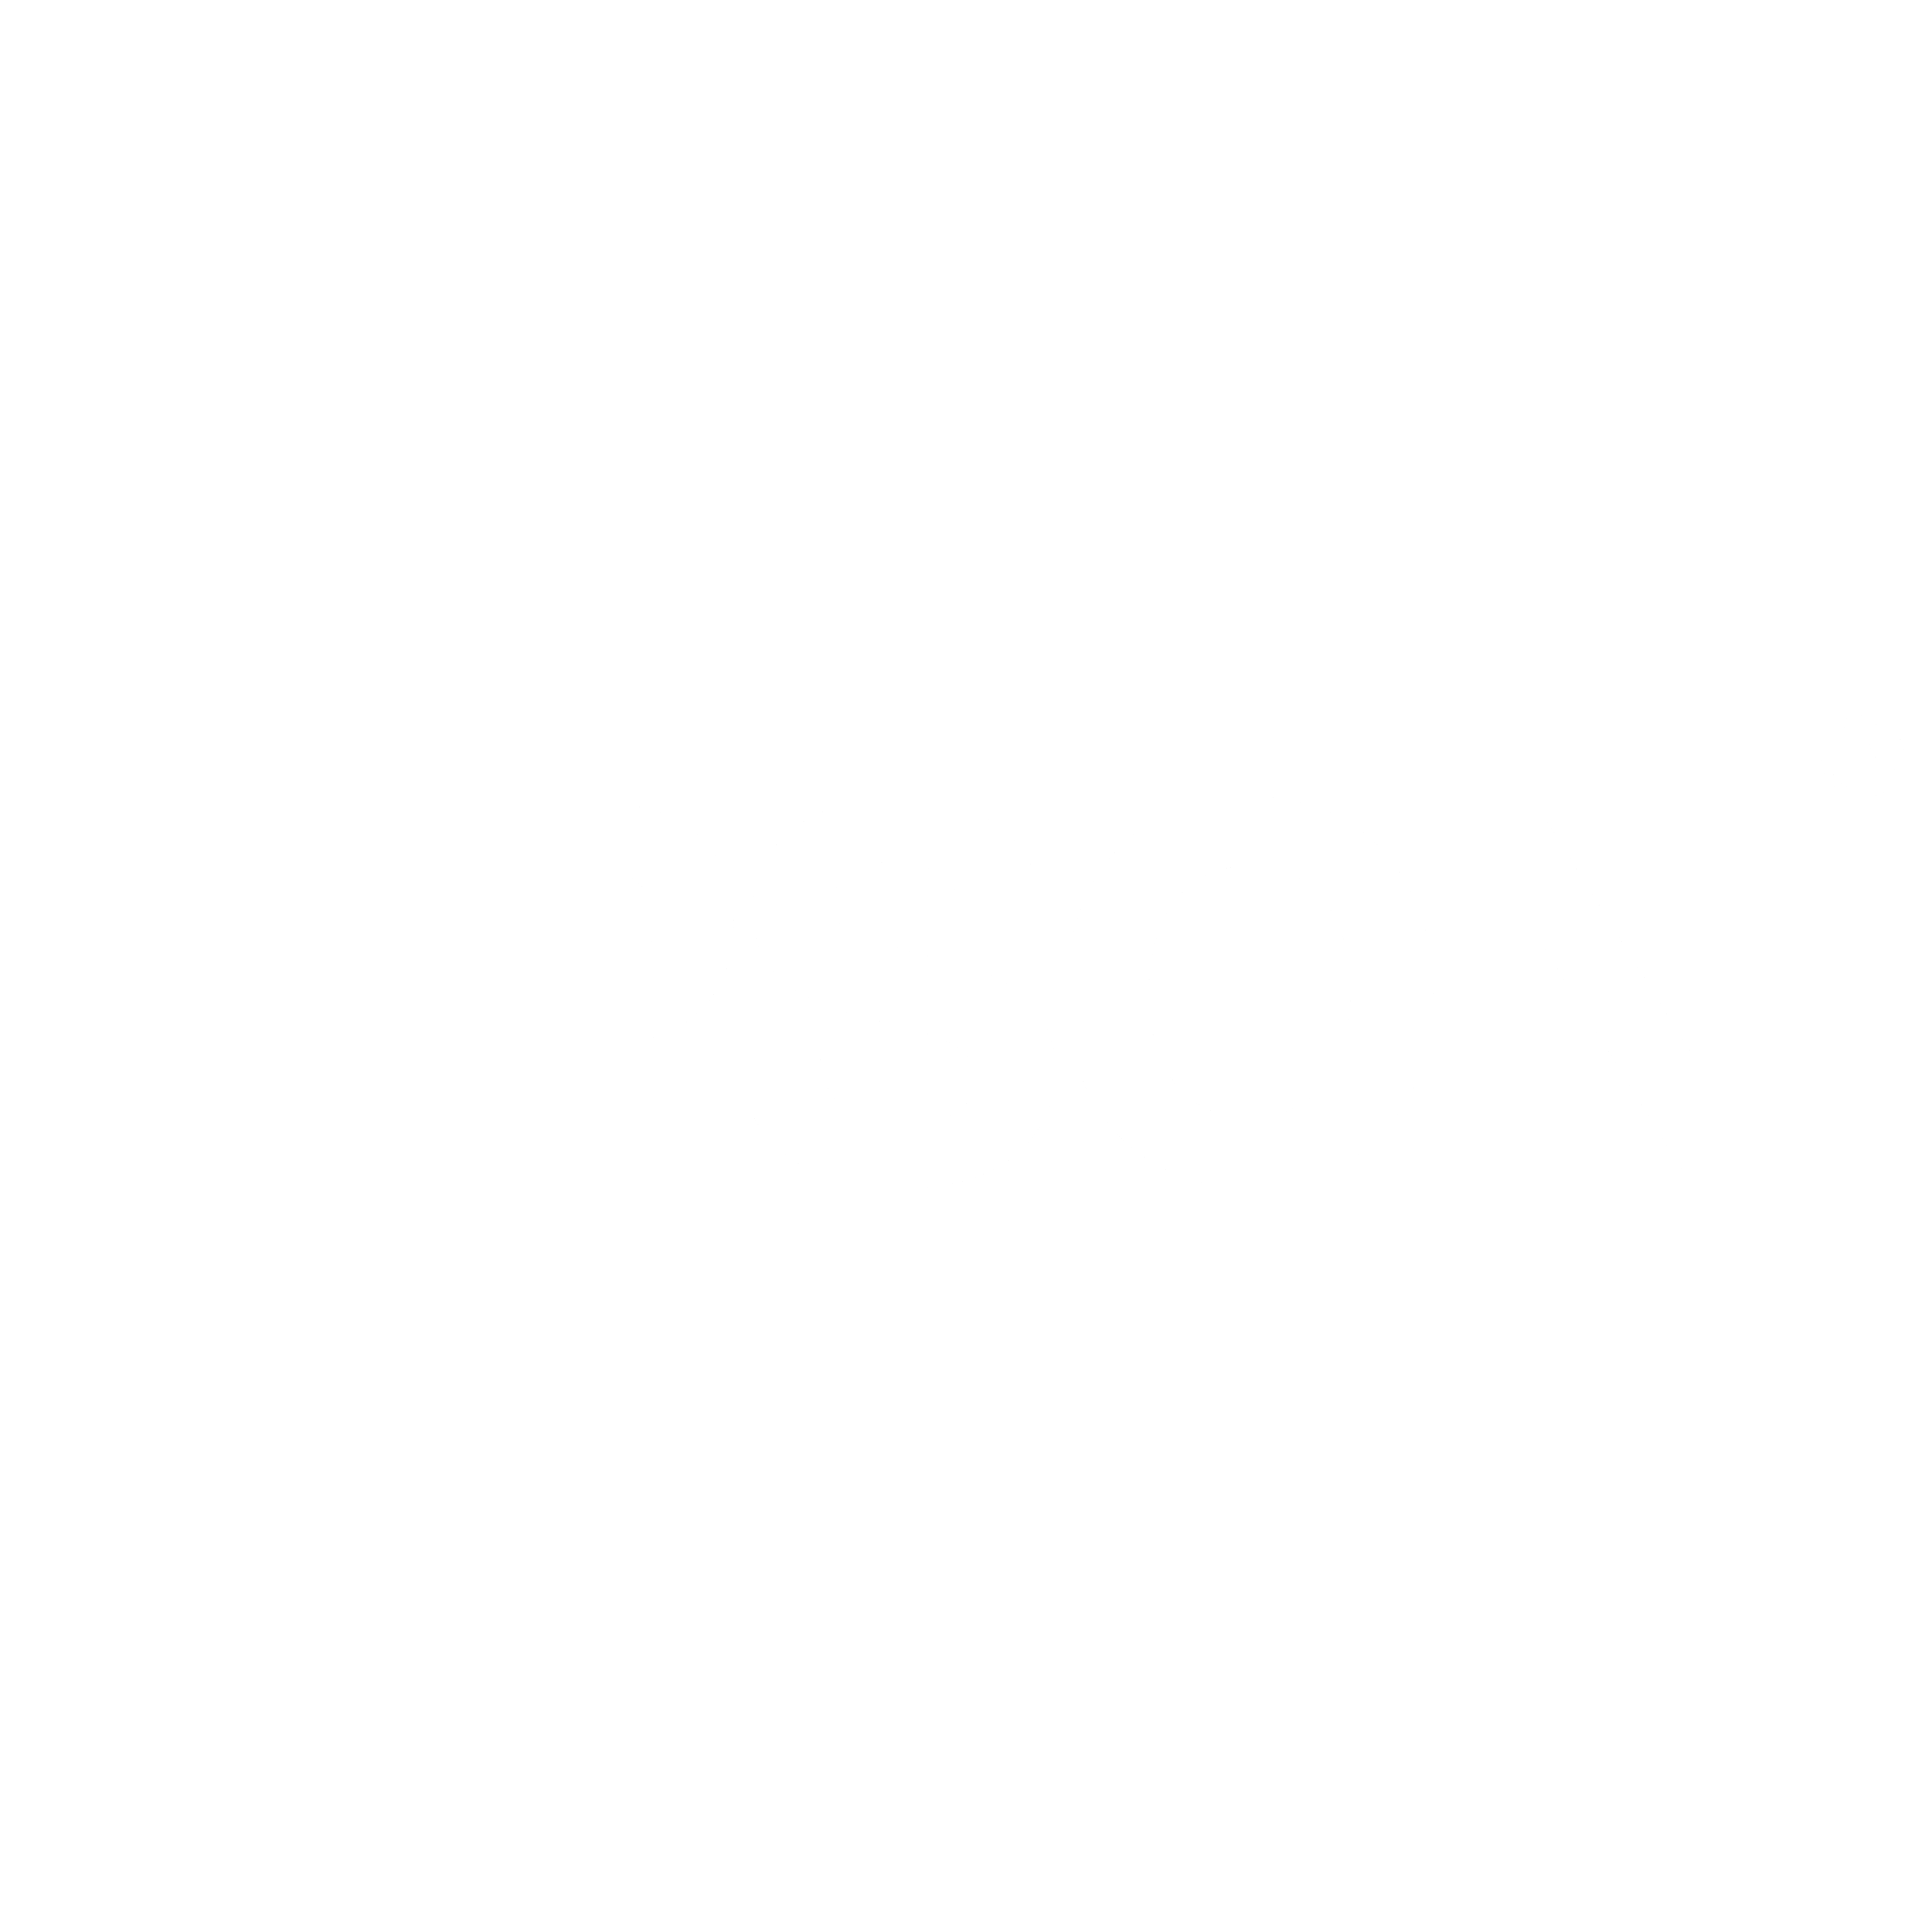 Epson Ecotank Logo Vector (.c